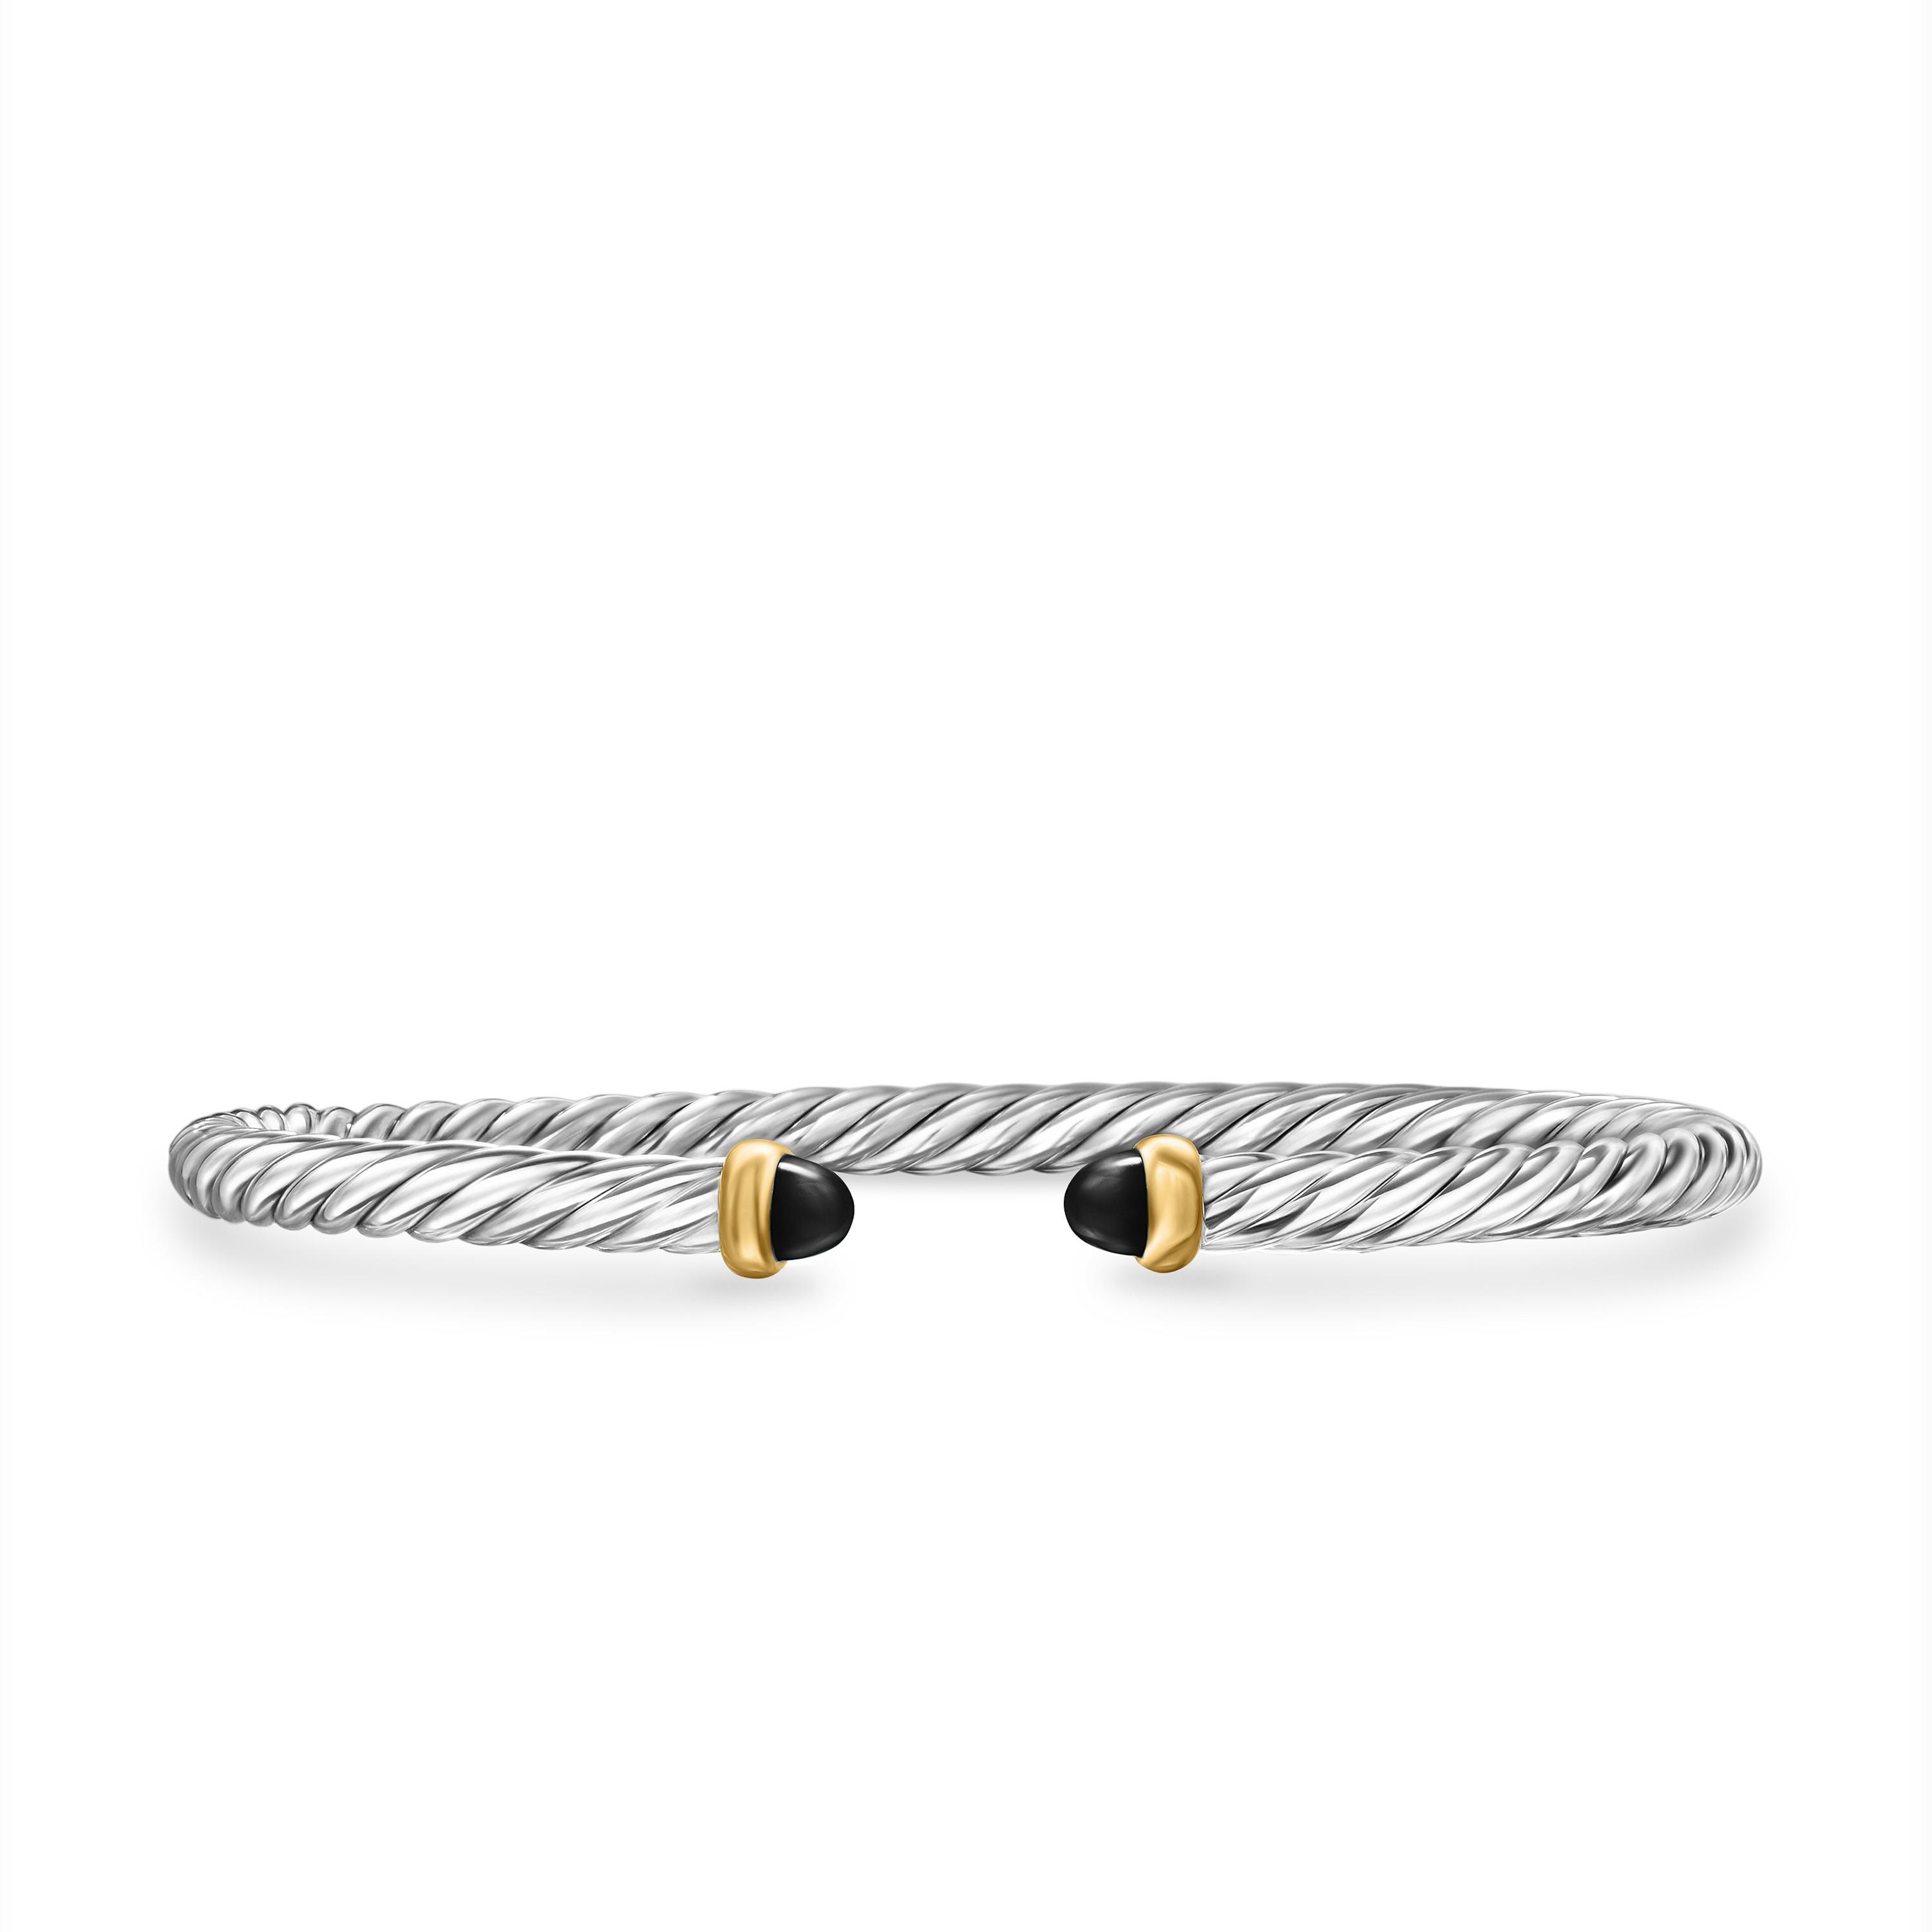 David Yurman Cable Flex Sterling Silver Bracelet with Black Onyx, Size Small 0